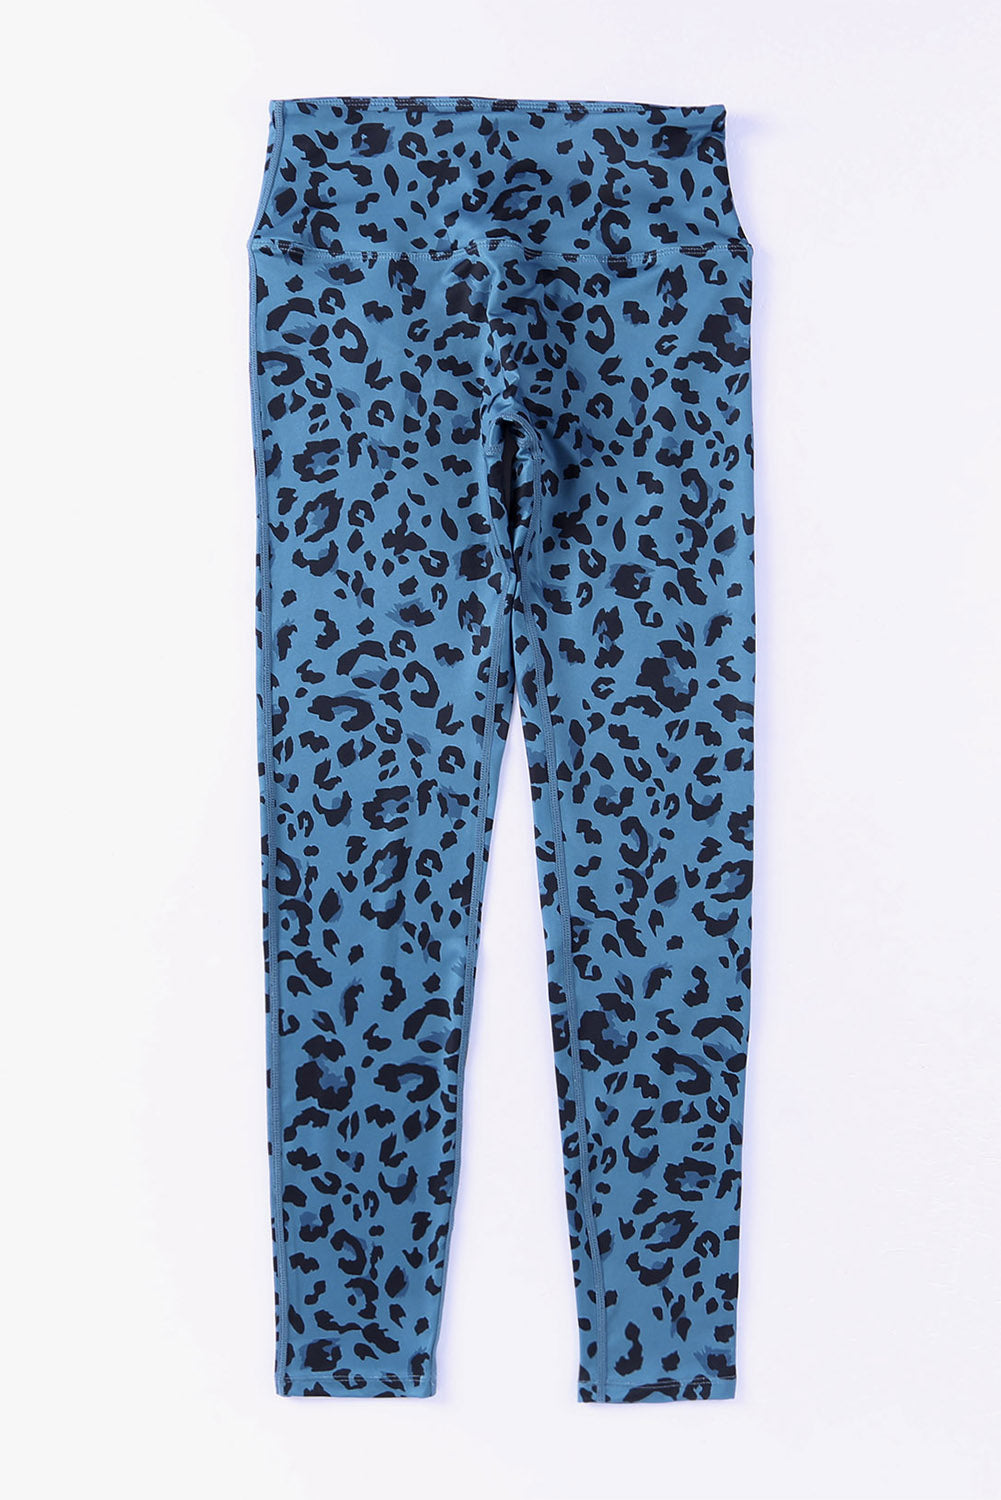 Women’s Leopard Print Wide Waistband Leggings